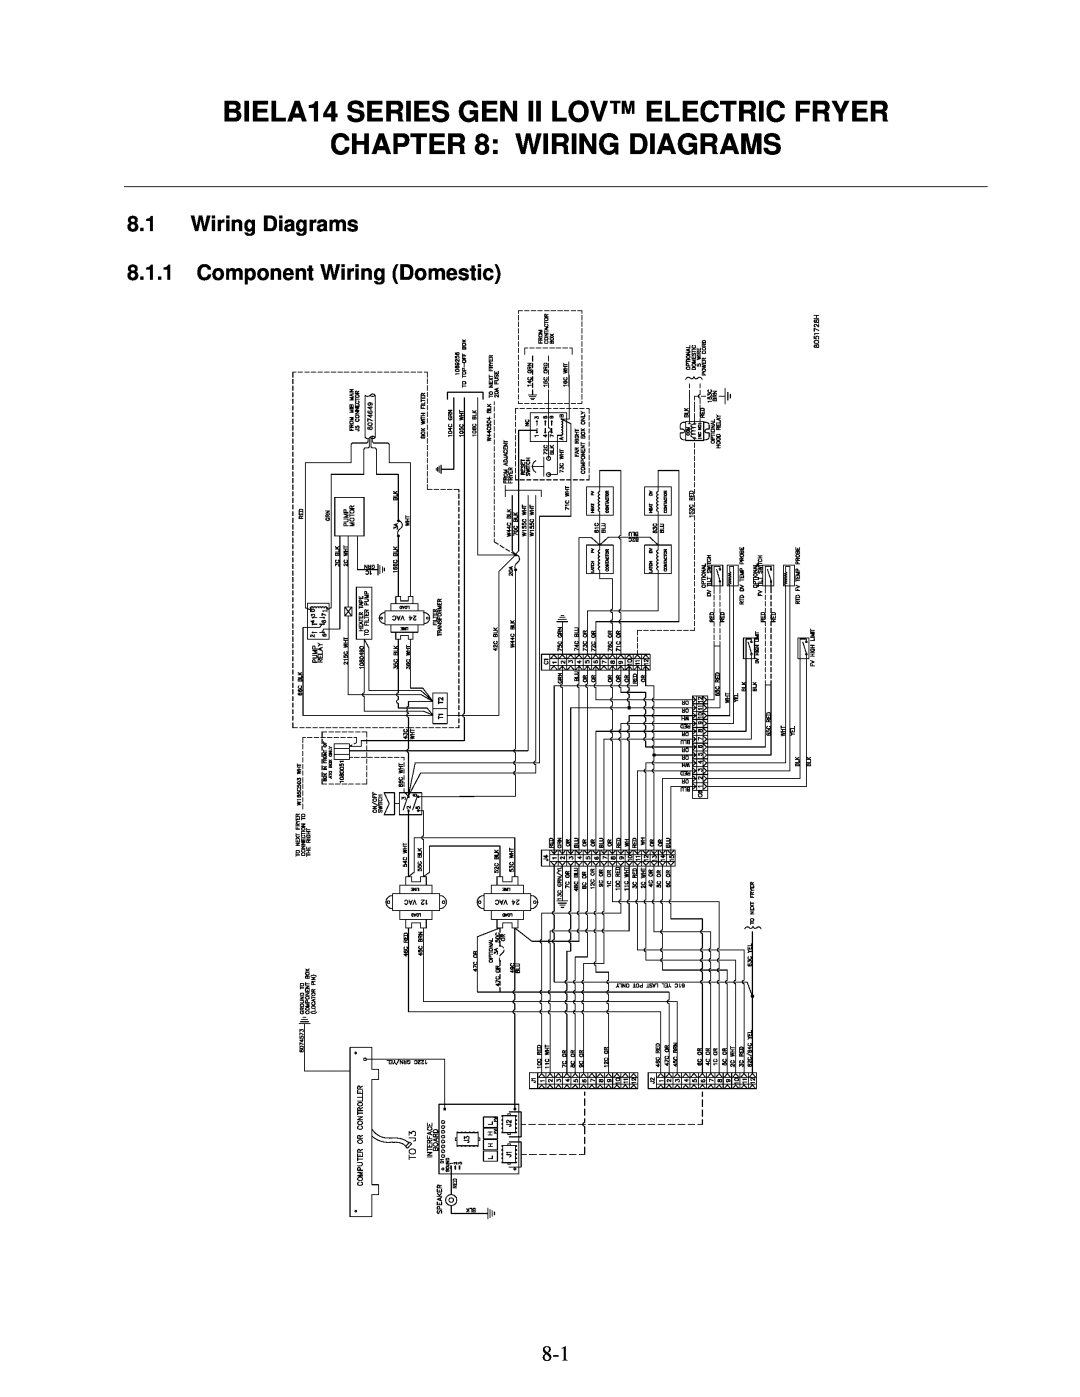 Frymaster warranty 8.1Wiring Diagrams 8.1.1Component Wiring Domestic, BIELA14 SERIES GEN II LOV ELECTRIC FRYER 